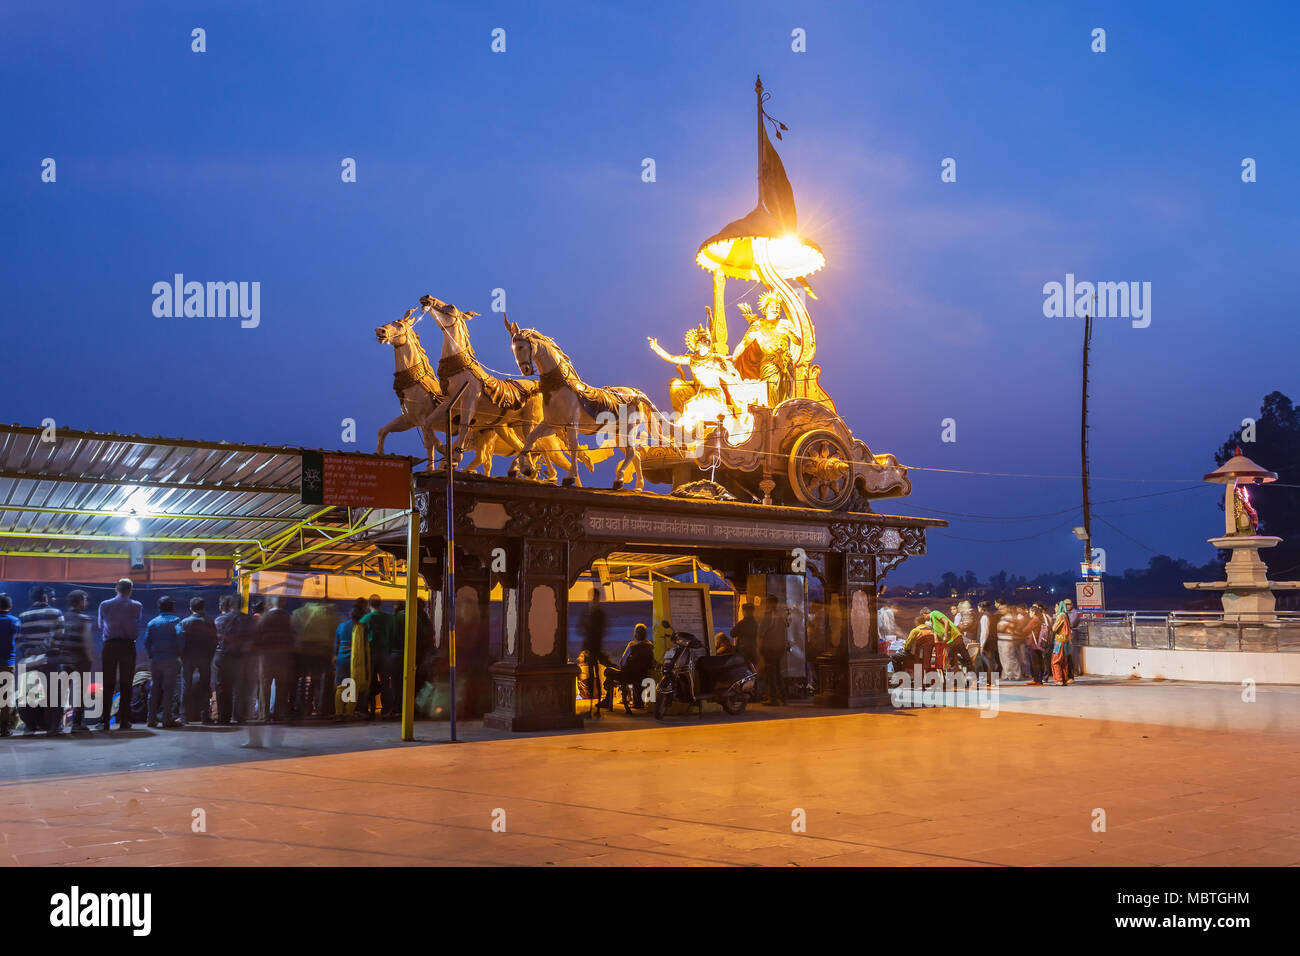 RISHIKESH, INDIA - NOVEMBER 08, 2015: A statue of the Hindu god Krishna and his devotee Arjuna in Rishikesh at night, North India. Stock Photo